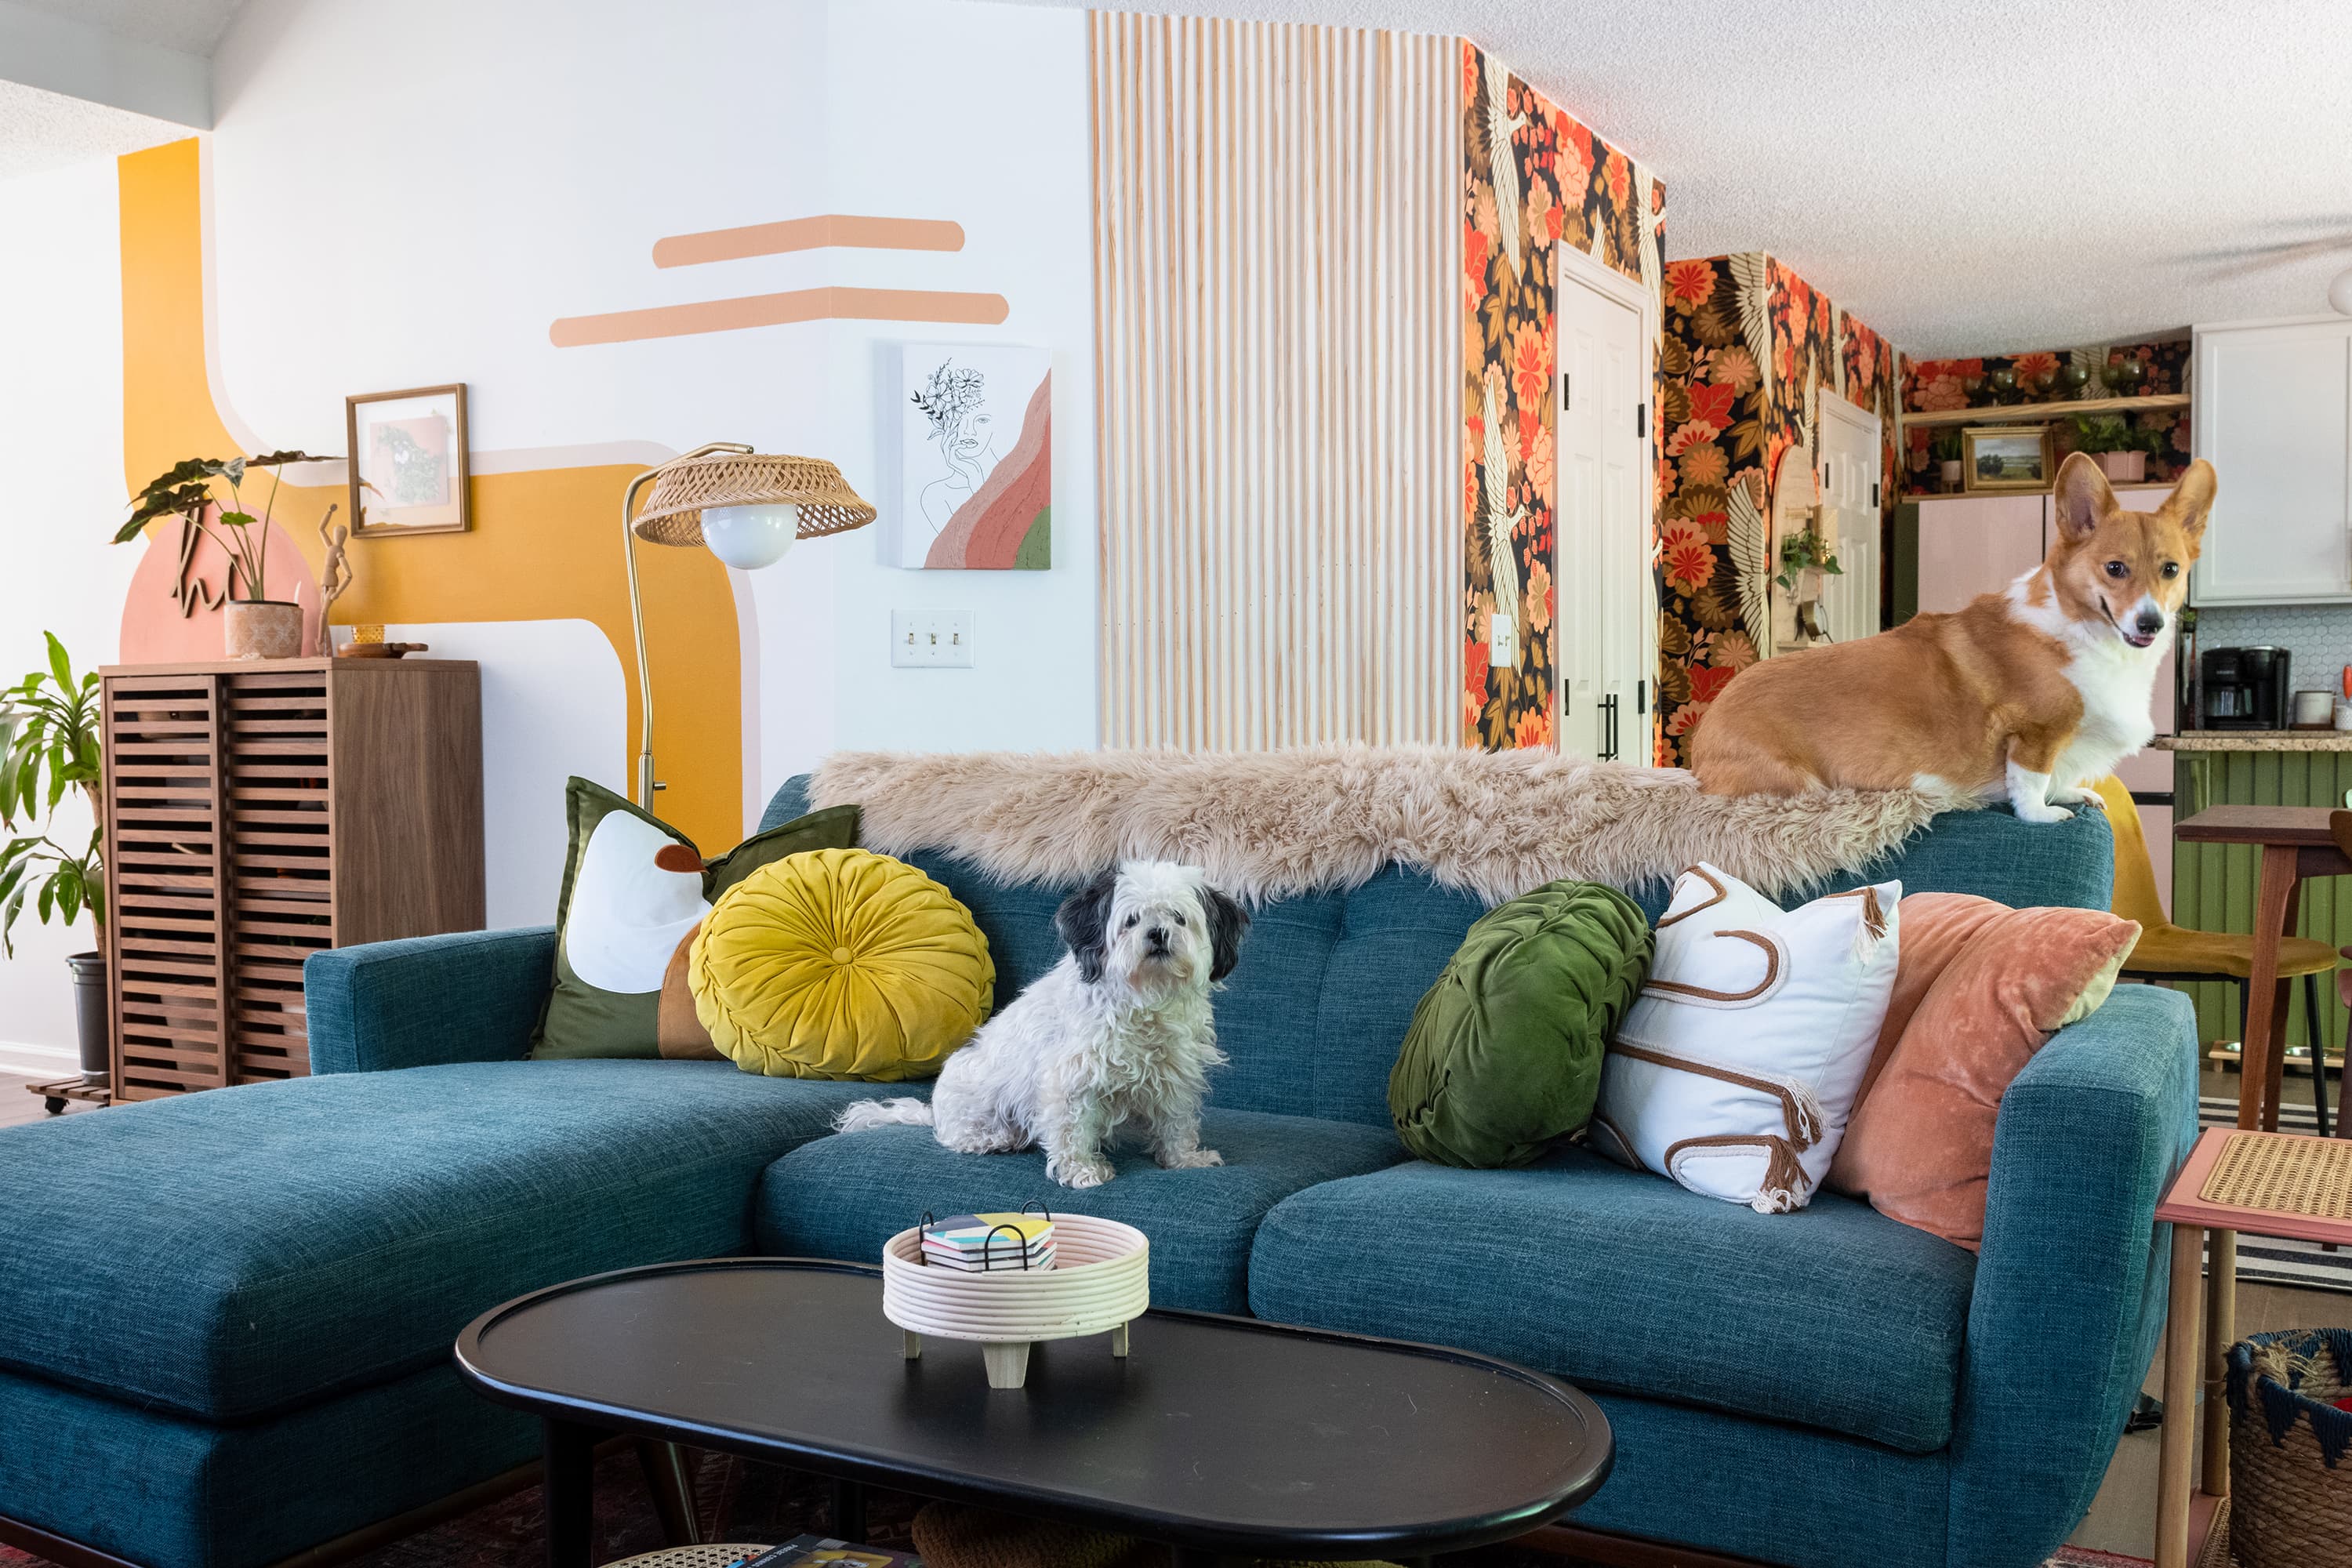 https://cdn.apartmenttherapy.info/image/upload/v1656170600/at/Ford-DIY-Makeover-Issue/megan-baker-home-shoot/dogs-diy-sofa.jpg